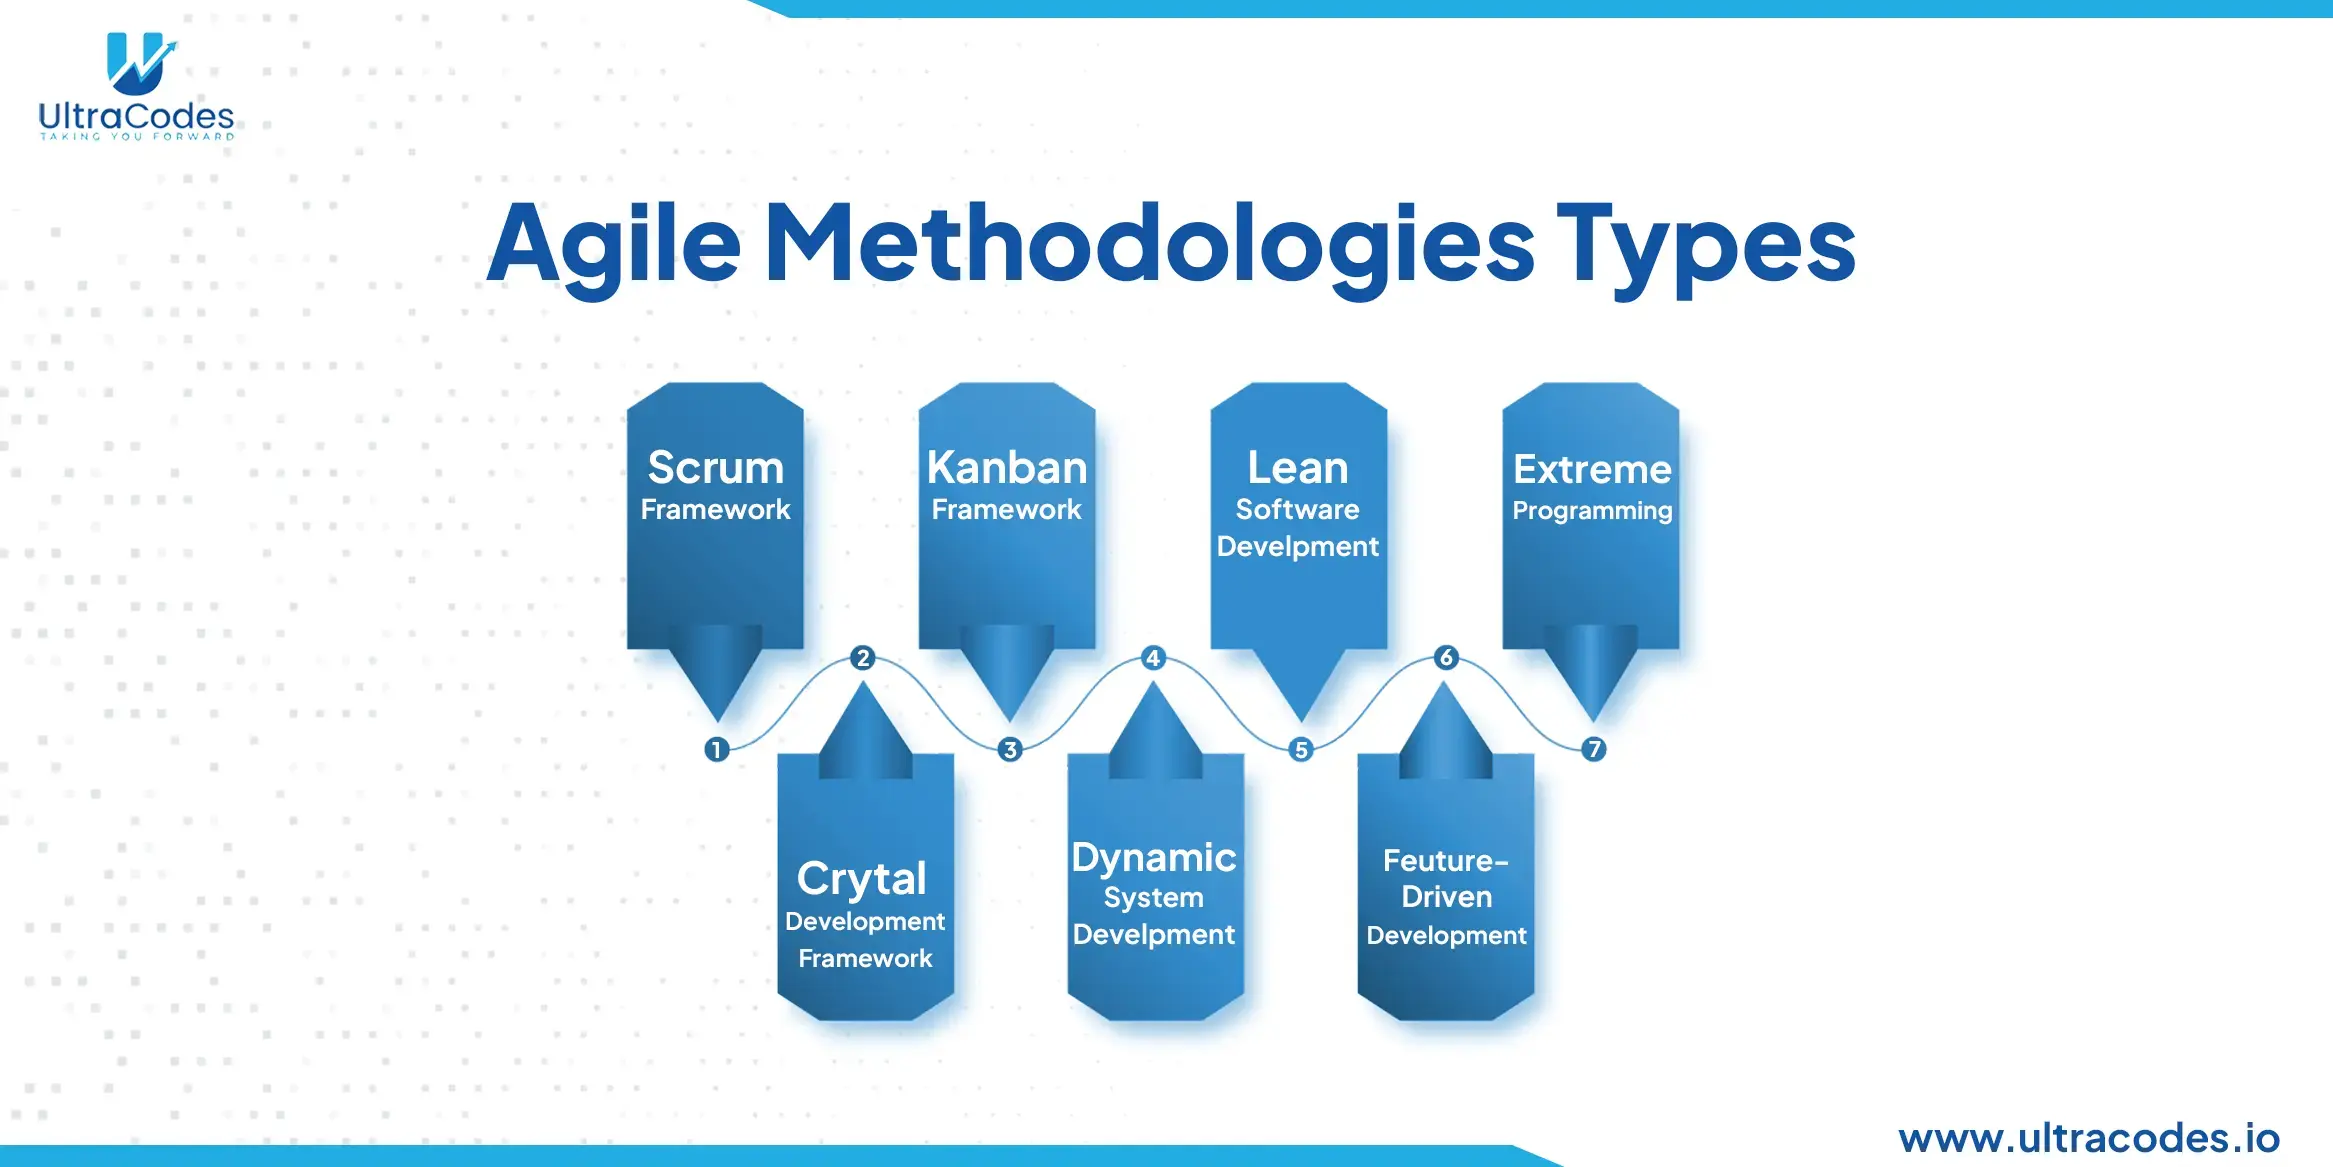 Use of Agile Methodology in Companies
